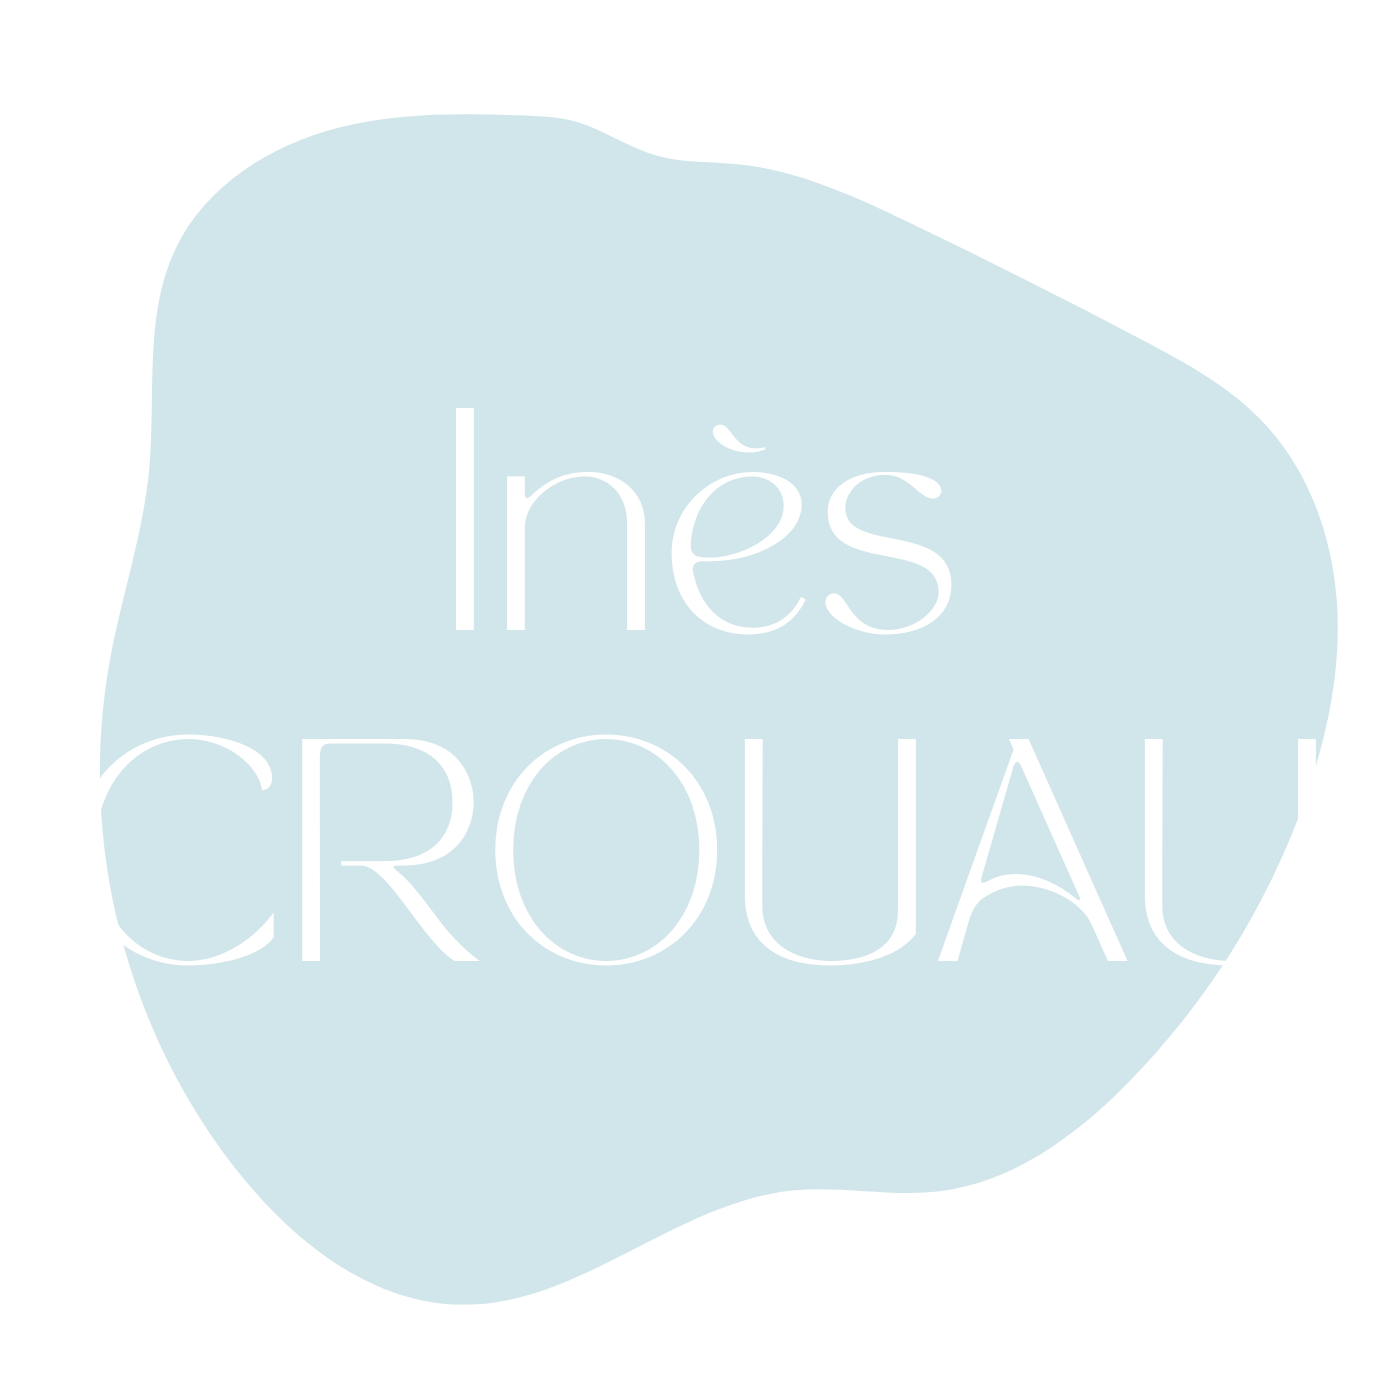 Inès Crouau